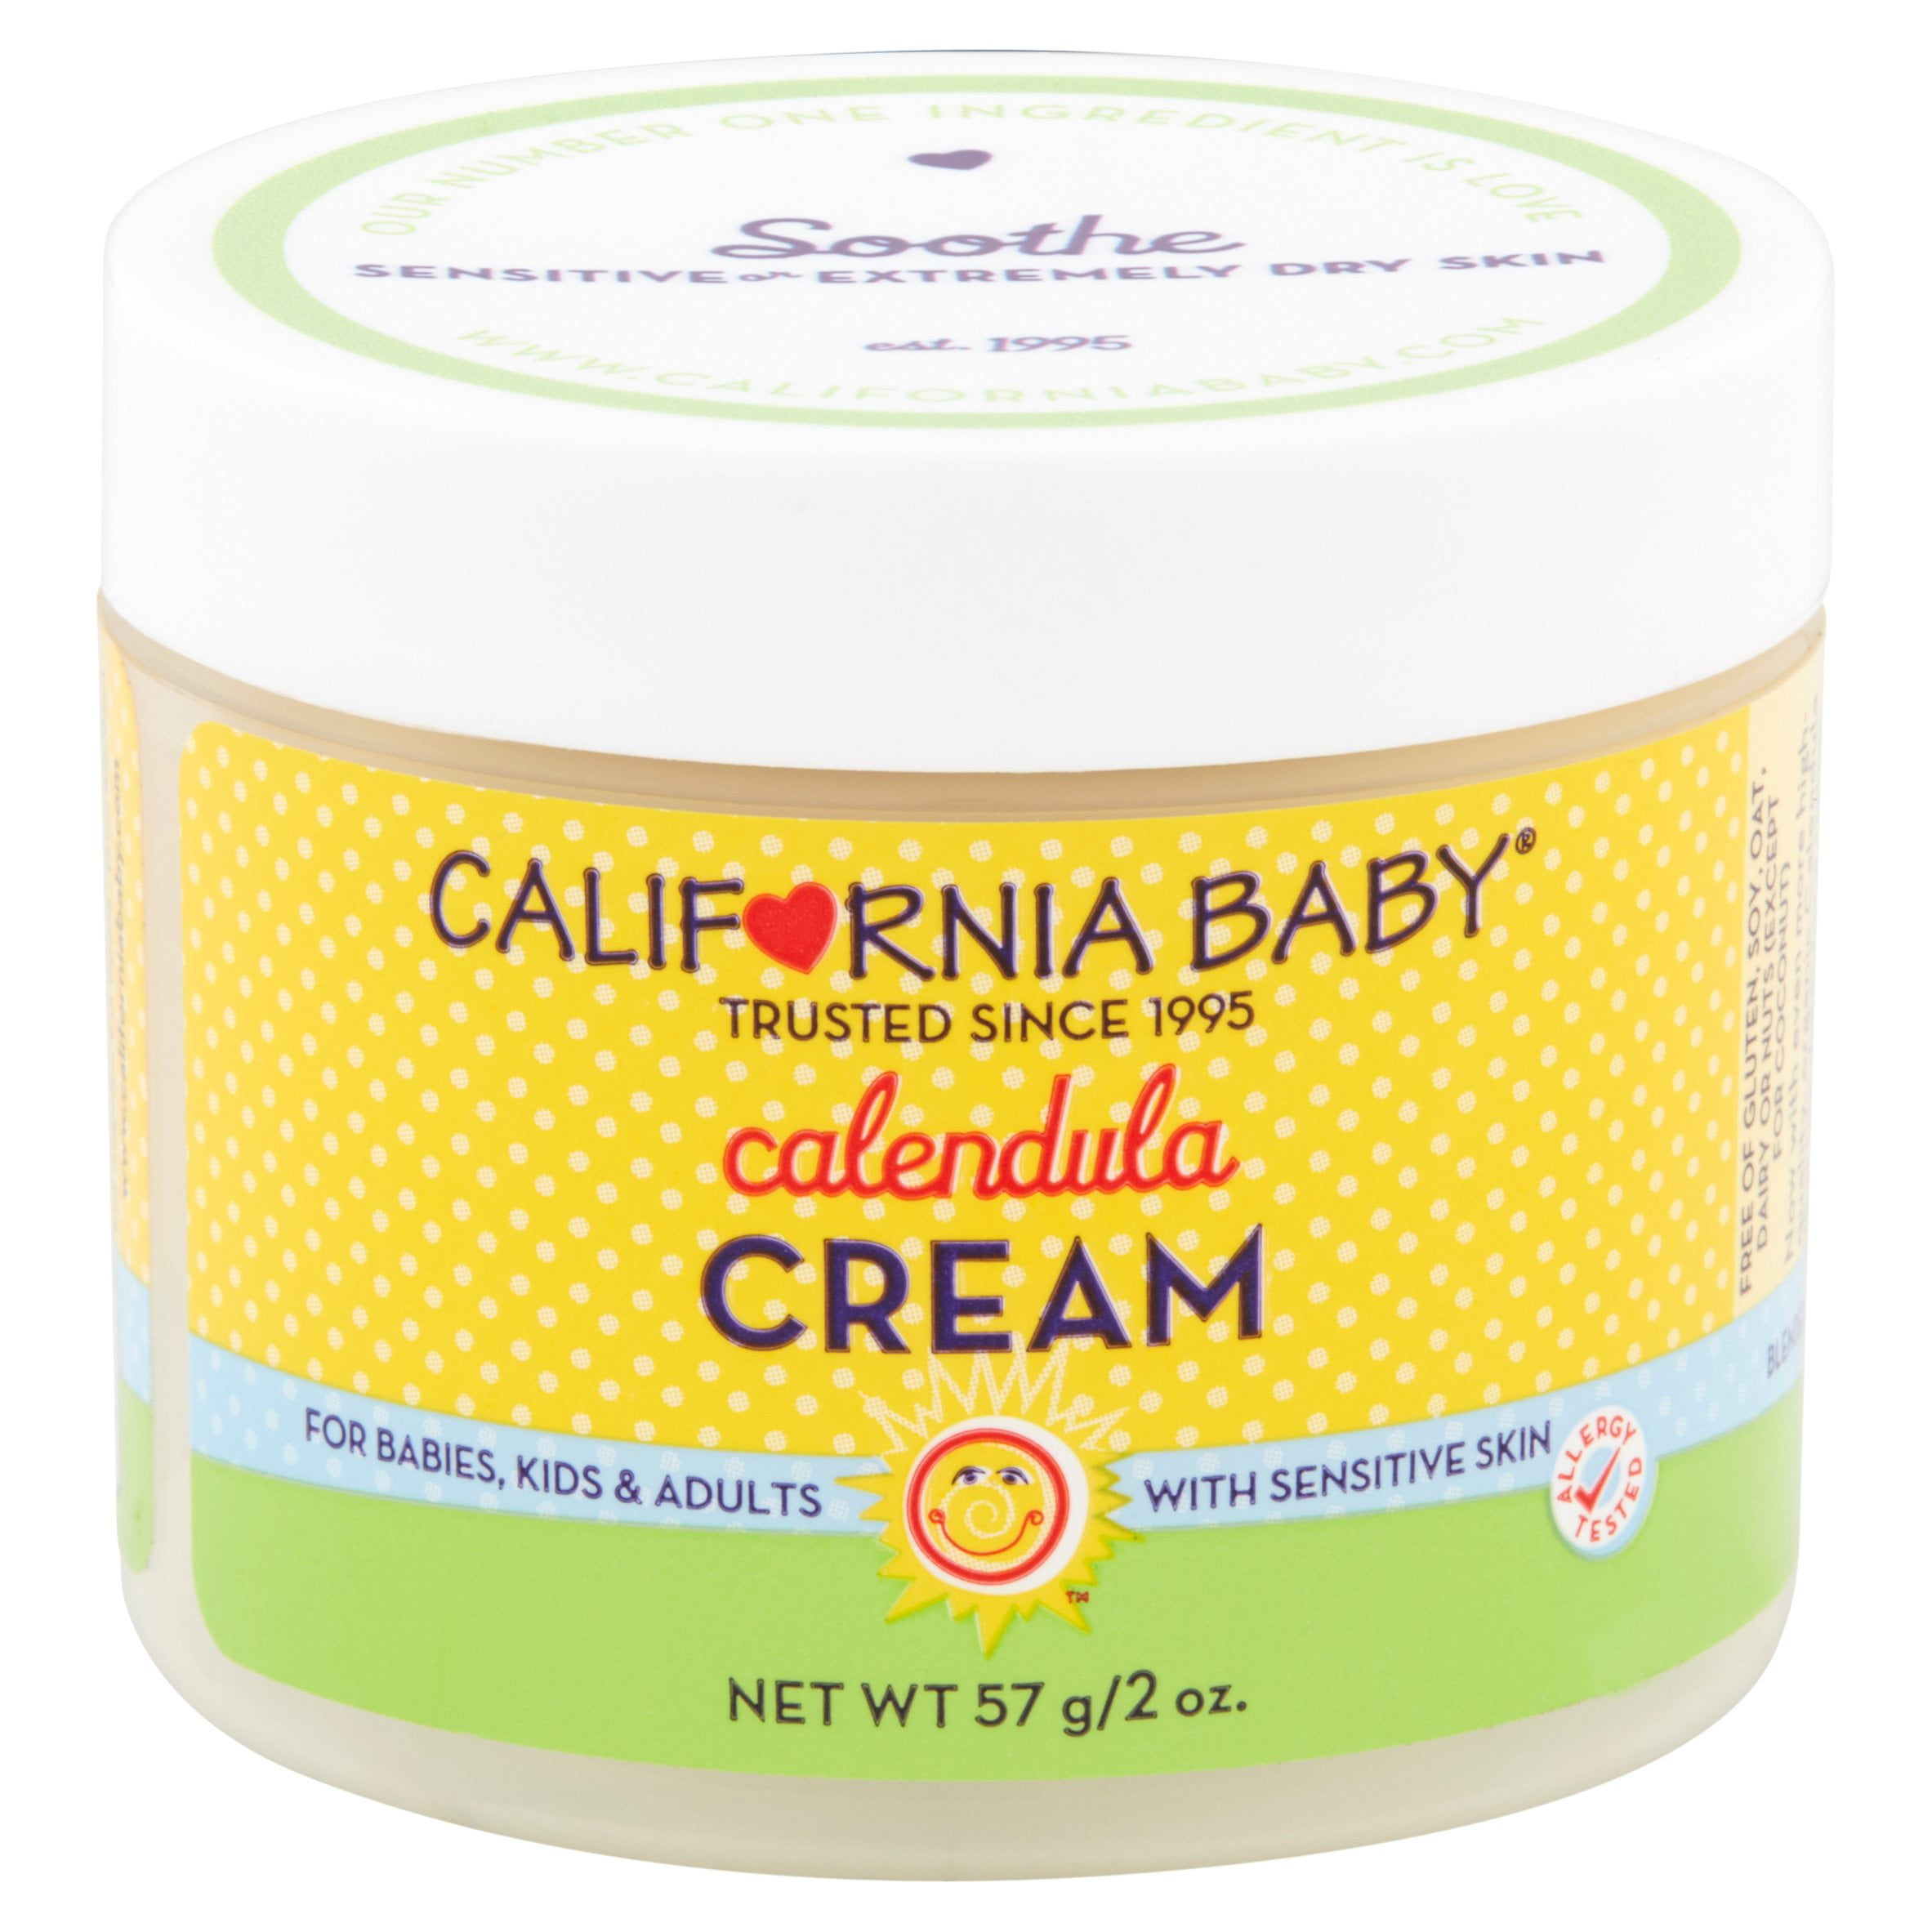 California Baby Calendula Cream, 2 Oz 